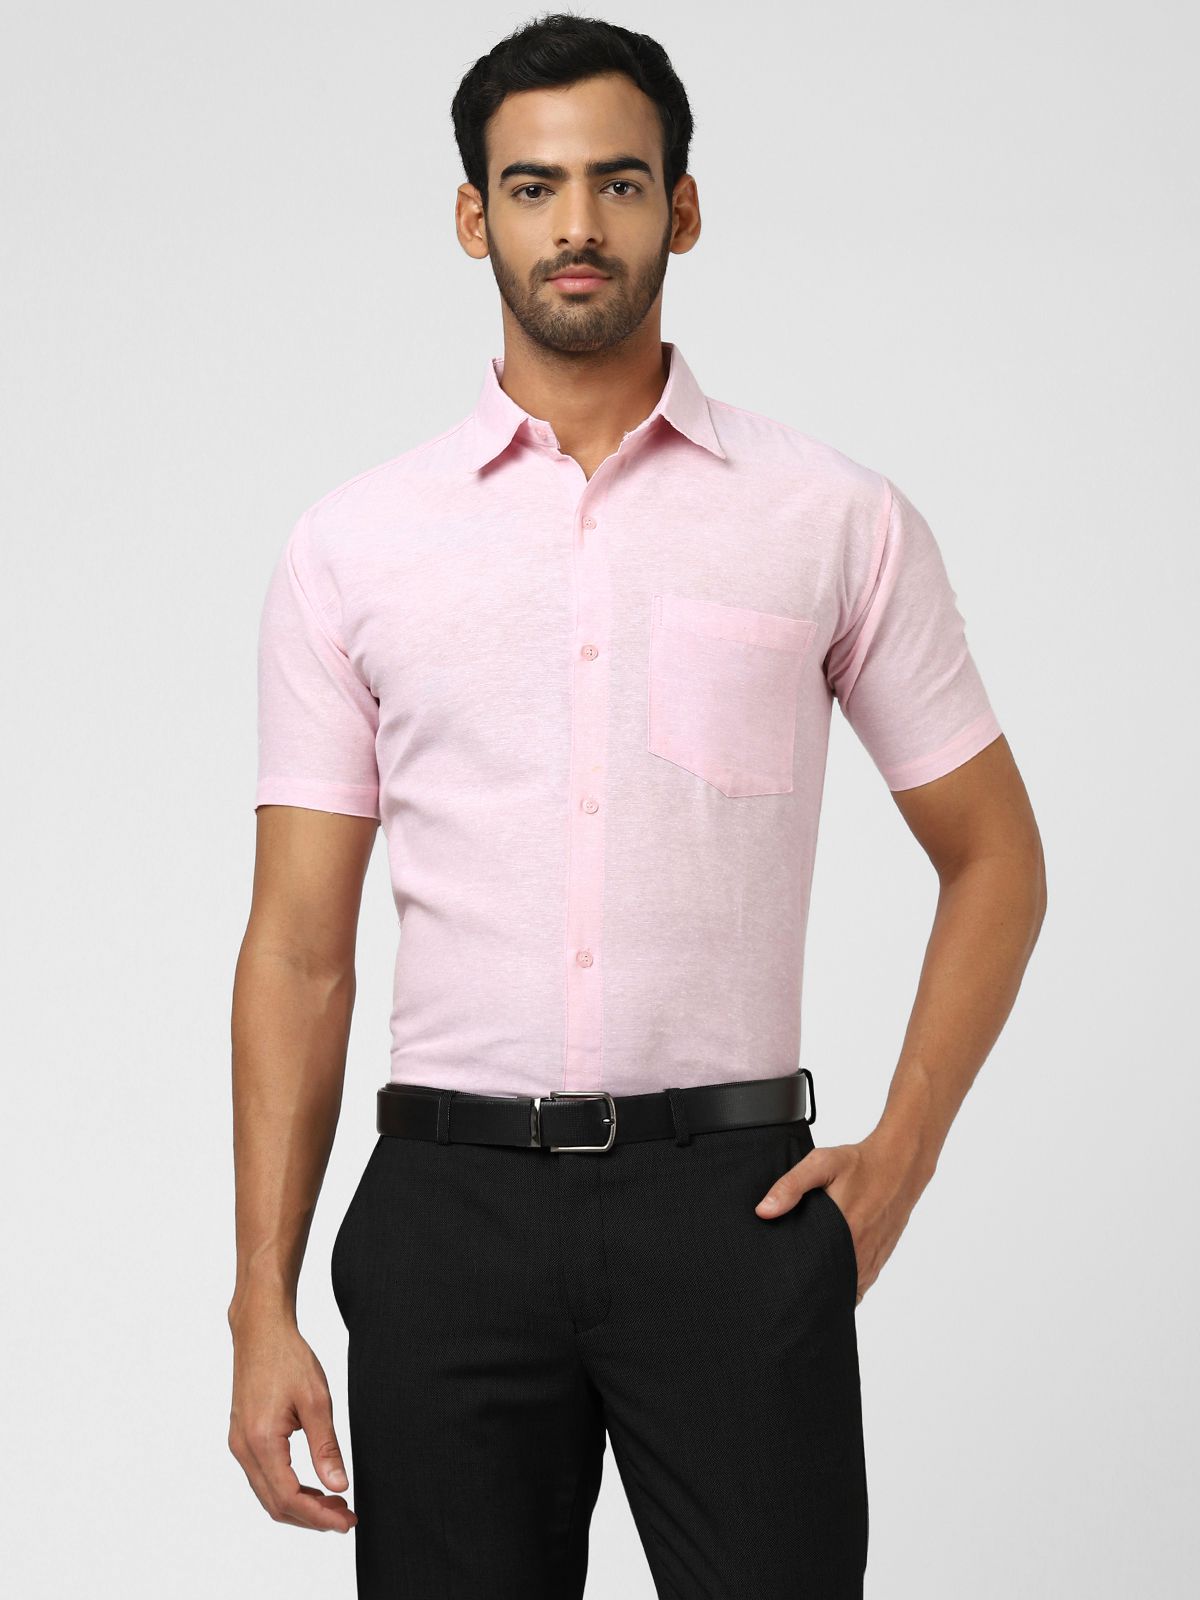     			DESHBANDHU DBK - Pink Cotton Regular Fit Men's Casual Shirt ( Pack of 1 )